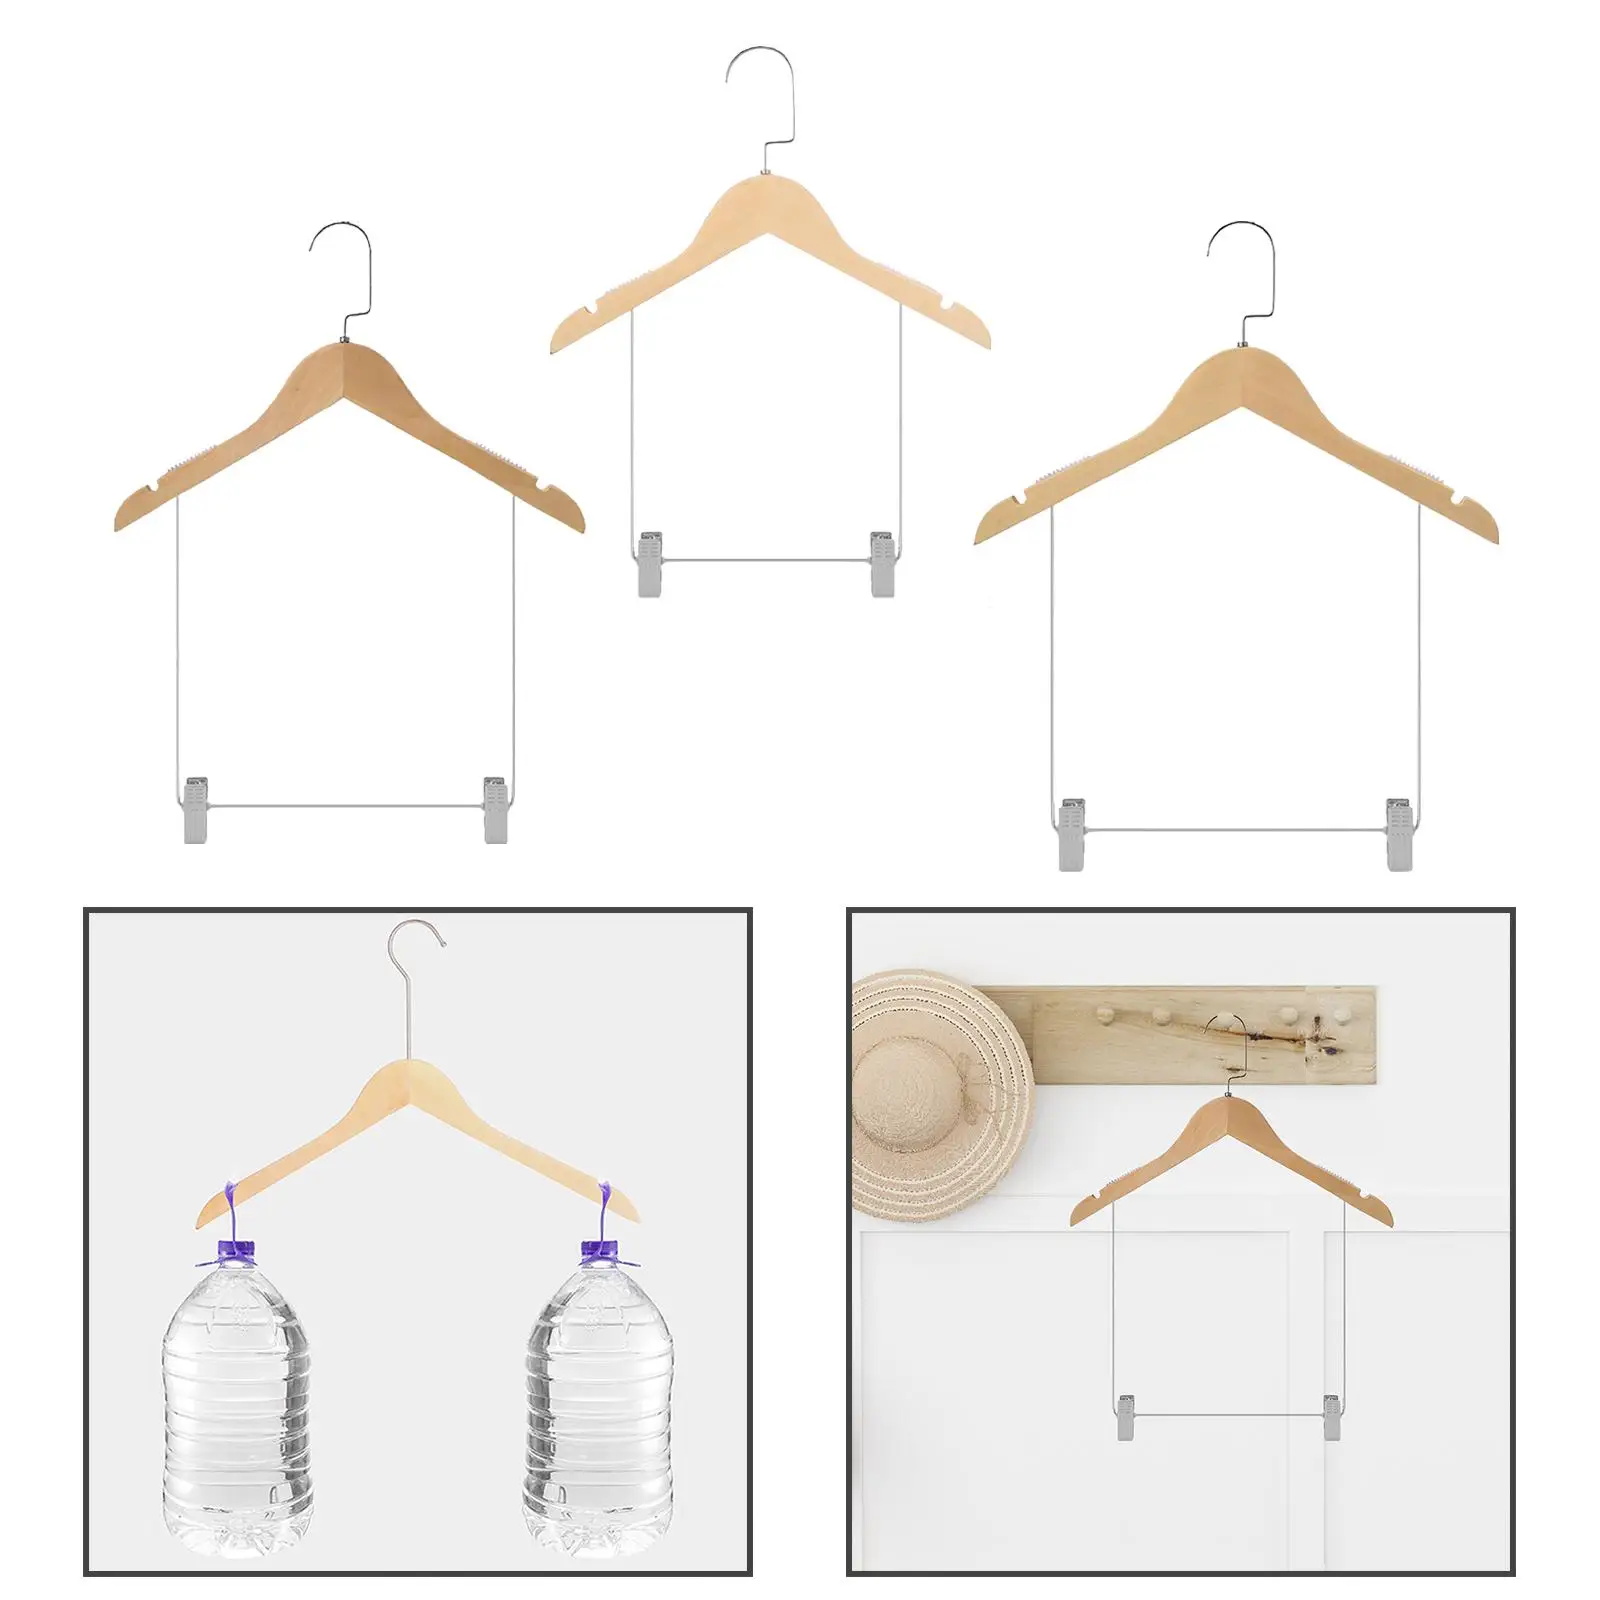 Wooden Suit Hangers Closet Clothes Organizer 360 Degree Swivel Hook Non Slip